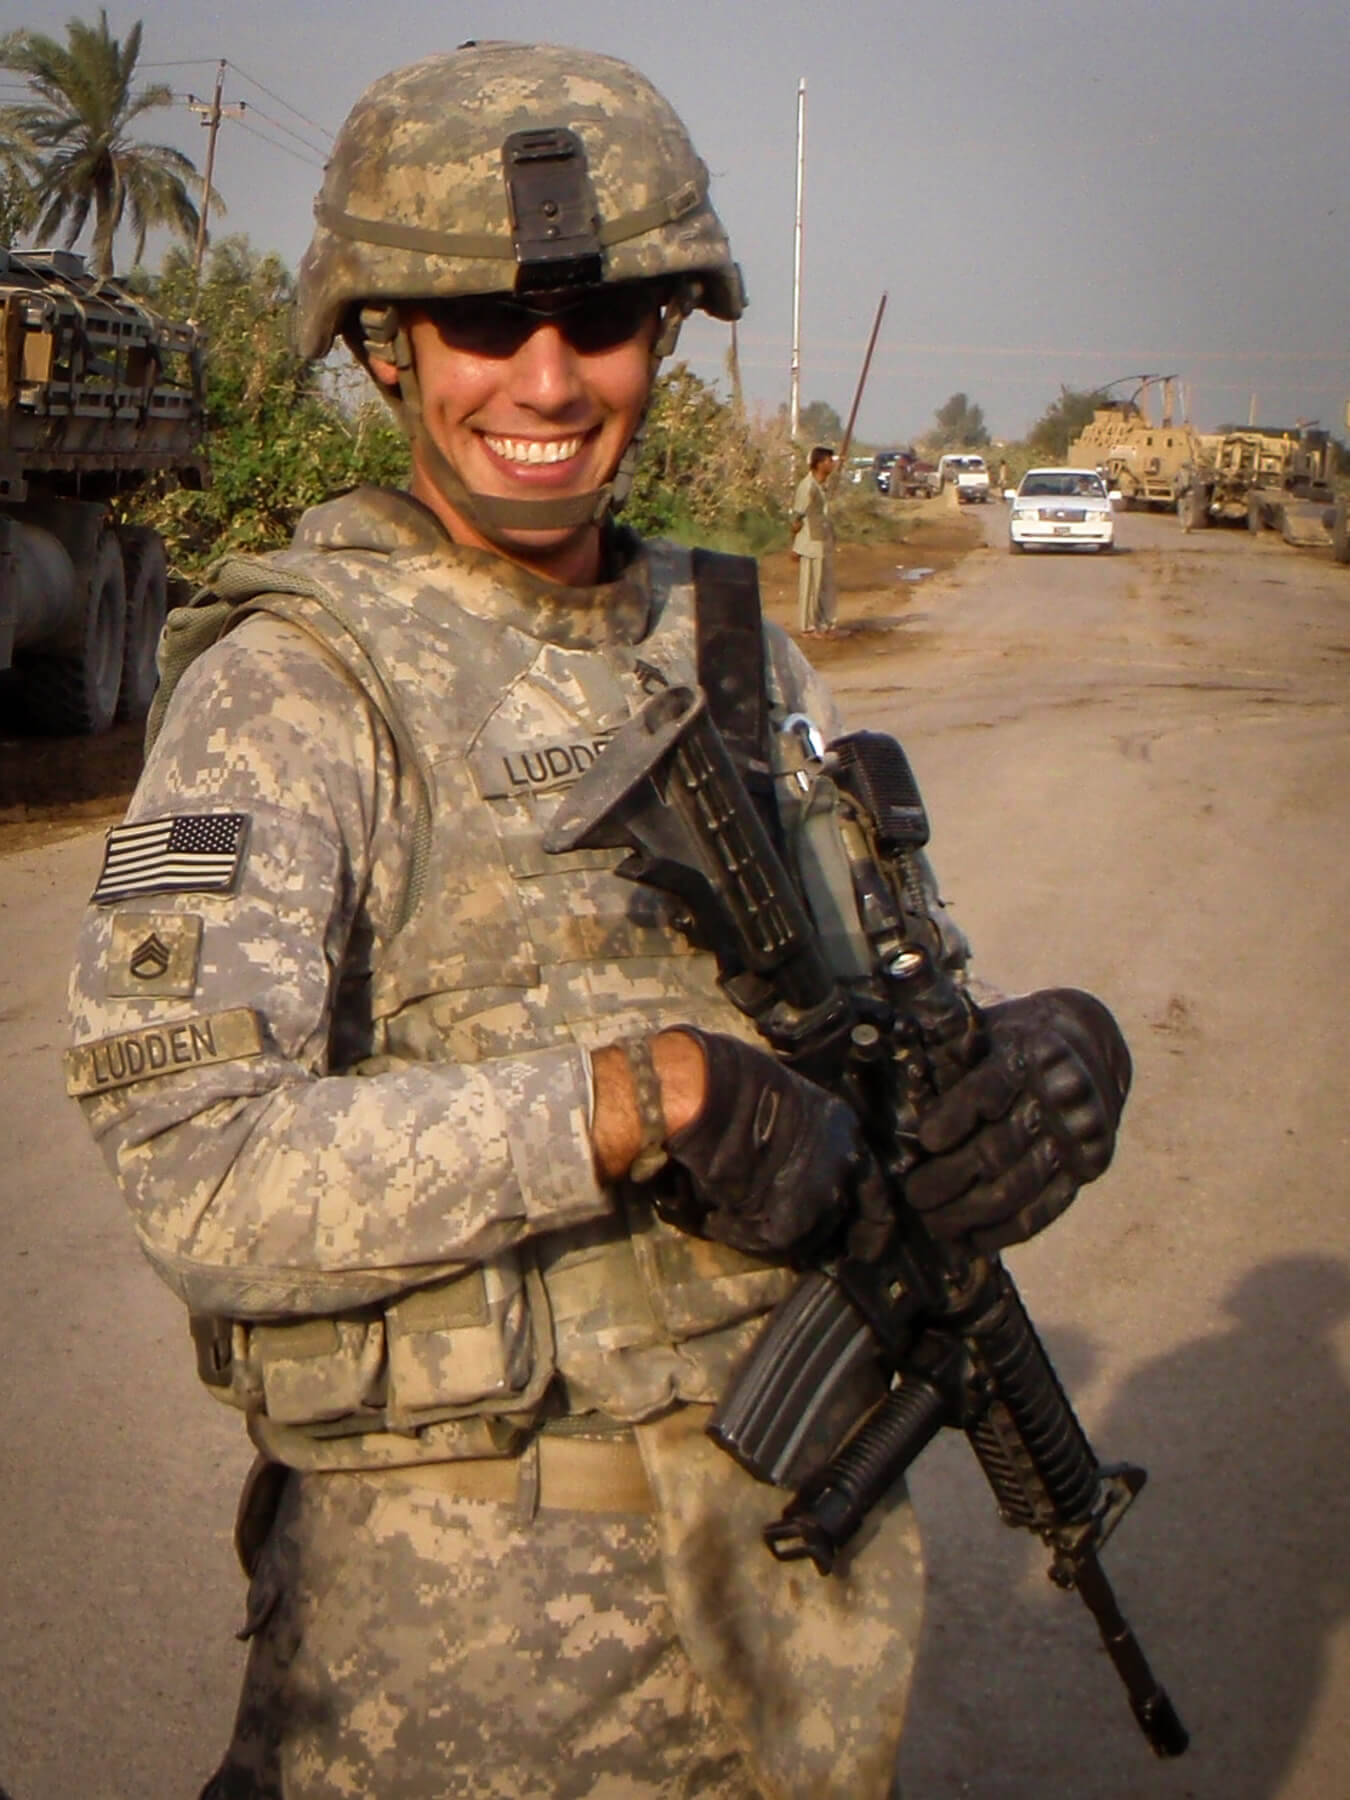 Martin Ludden on duty in Iraq